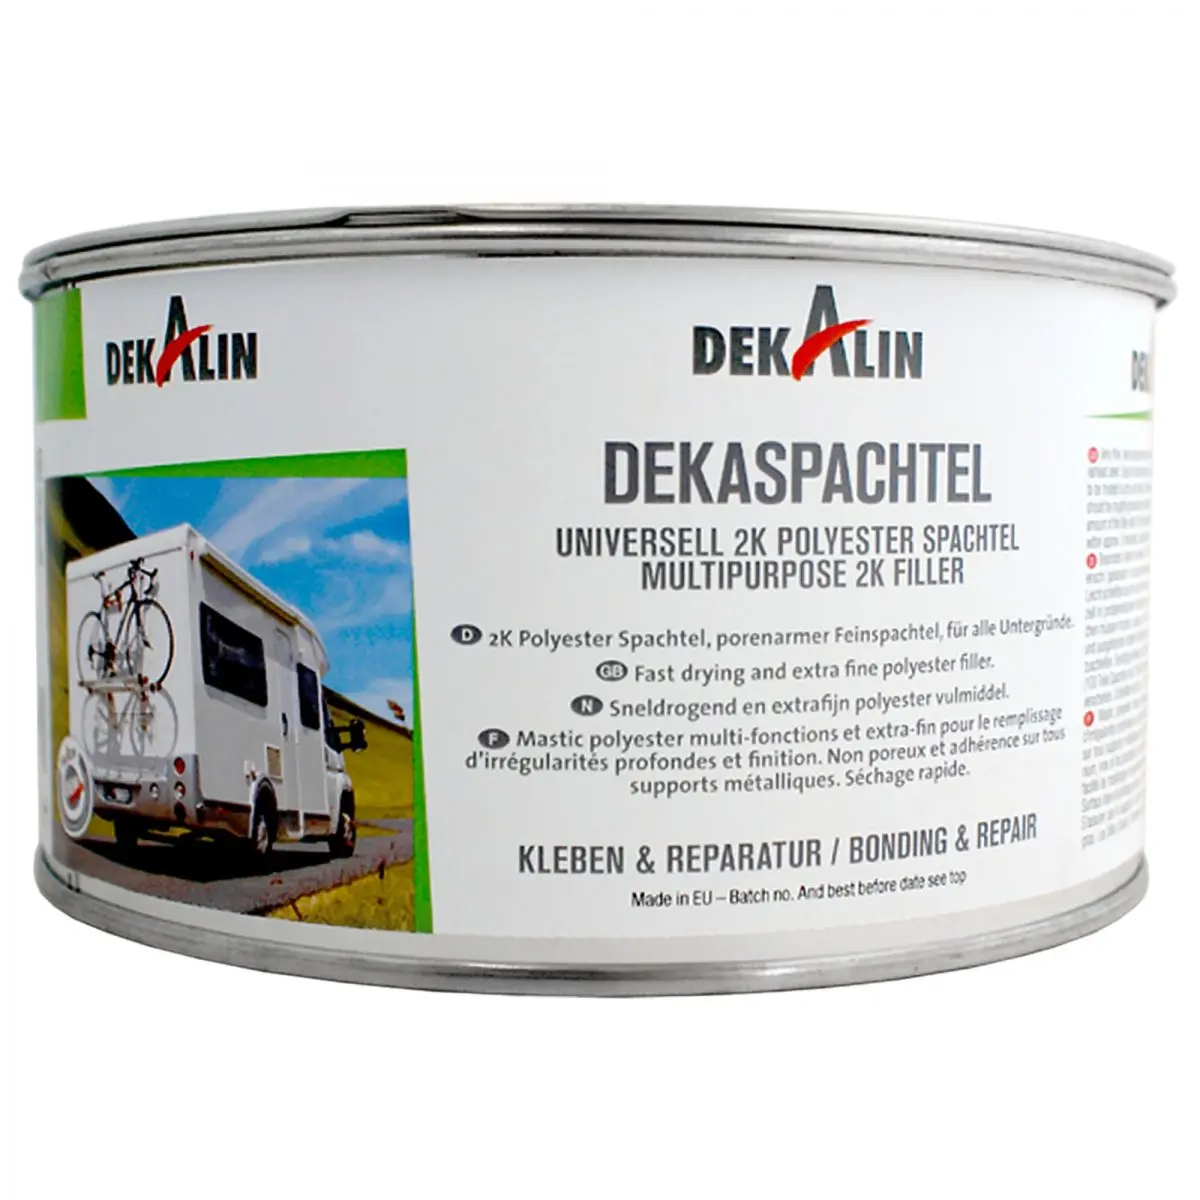 DEKA-Spachtel - 1kg 2 K-Polyester Feinspachtelmasse